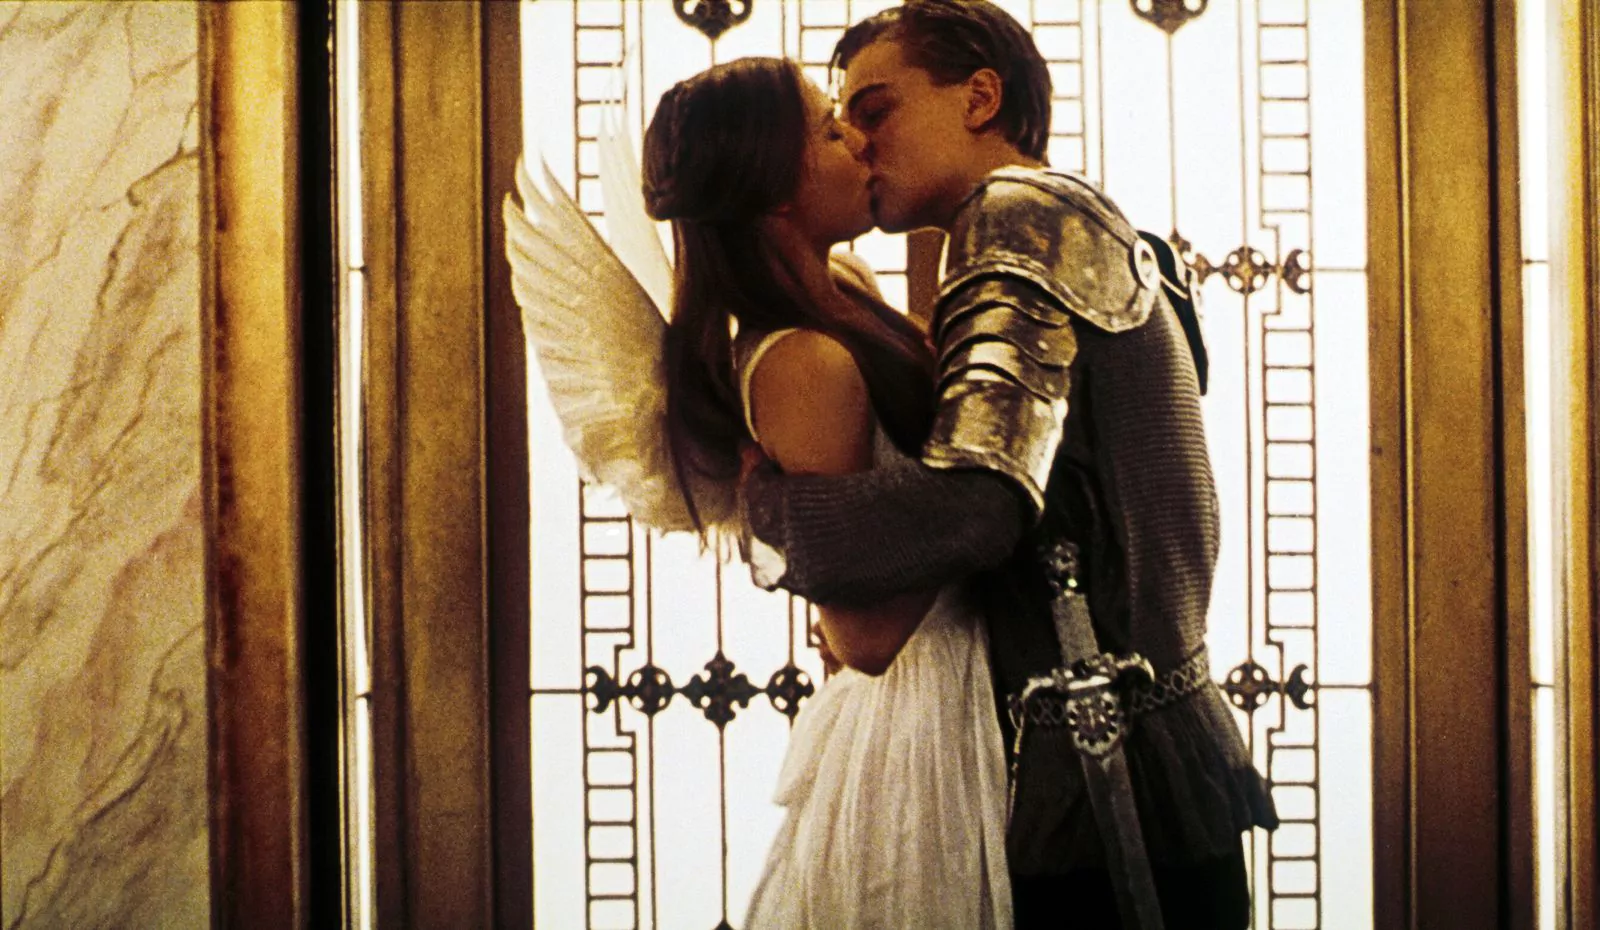 Claire Danes and Leonardo DiCaprio in the film Romeo and Juliet, 1996